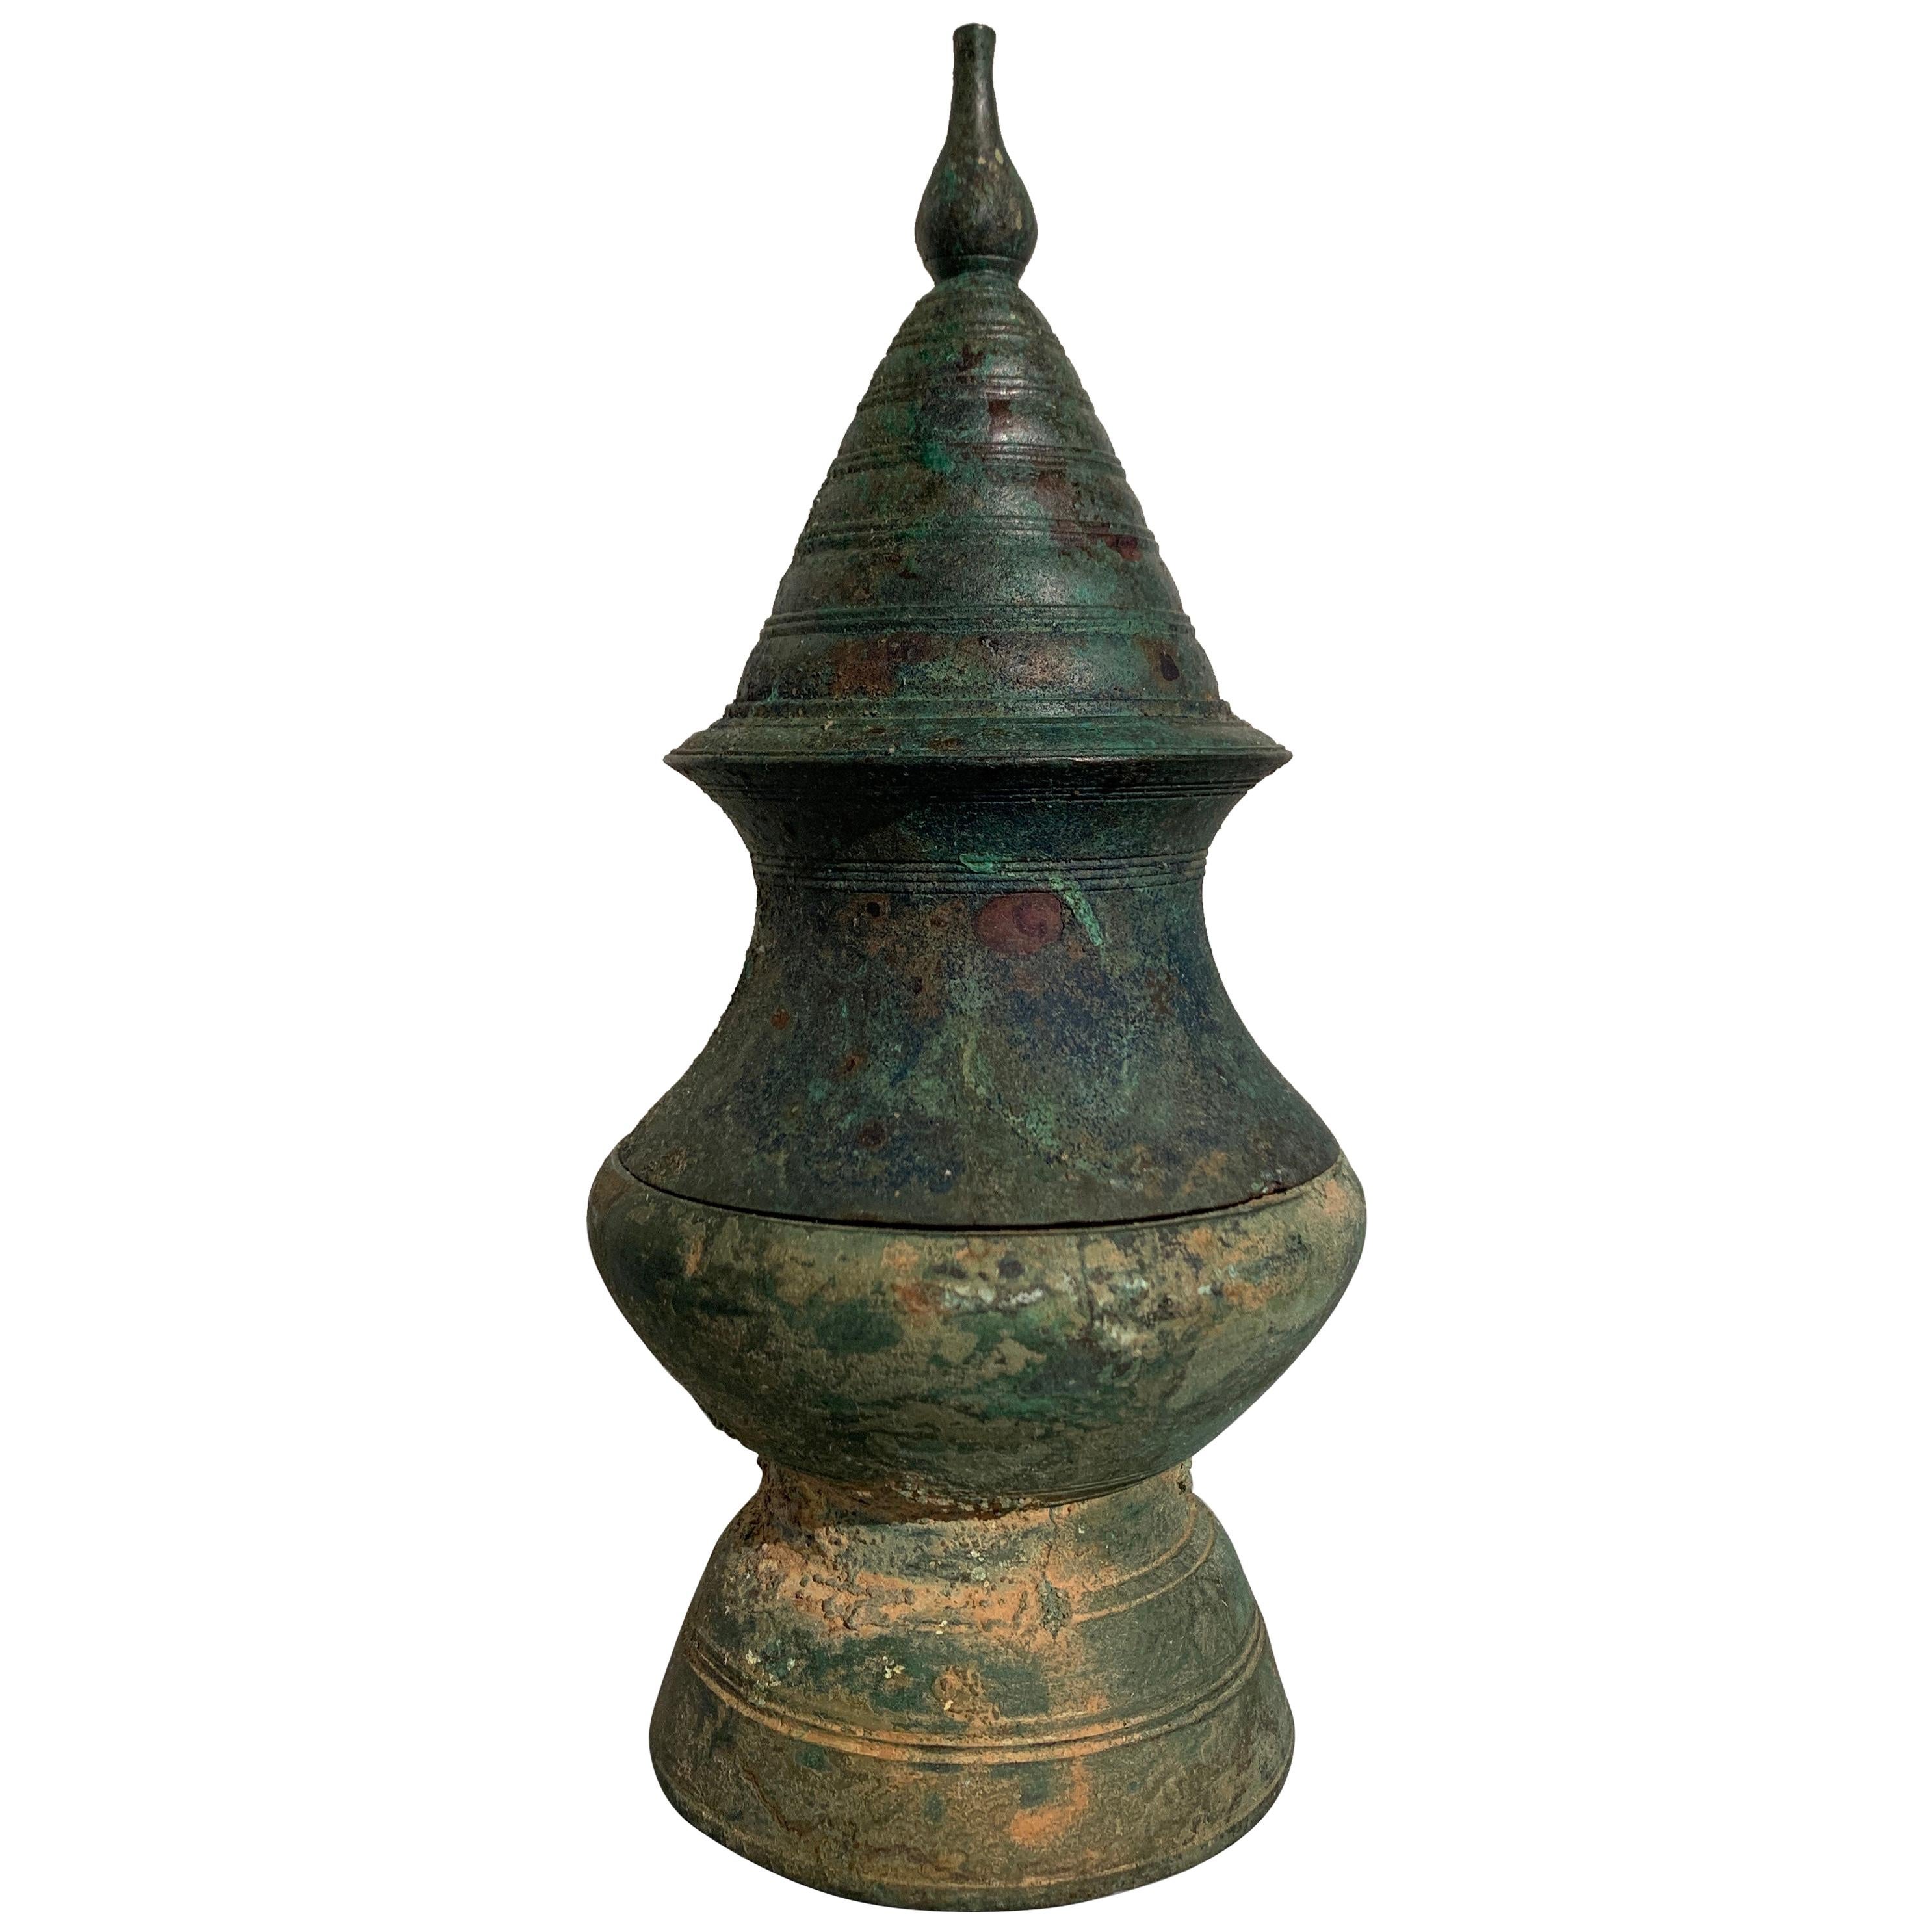 Grand pot à chaux khmer en bronze en forme de stupa:: période d'Angkor:: 12e-14e siècle